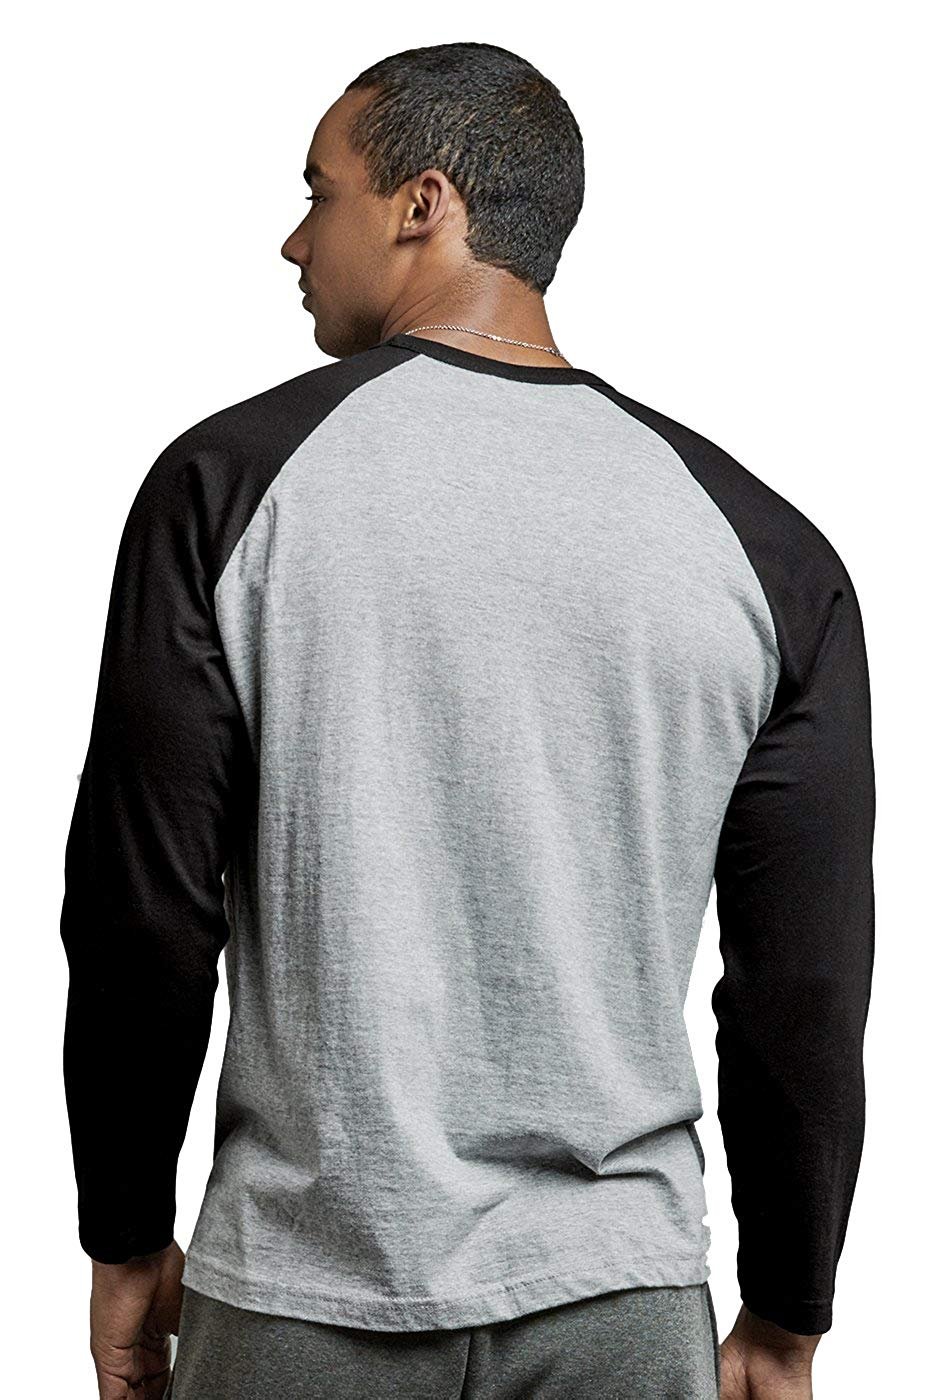 DailyWear Mens Casual Long Sleeve Plain Baseball Cotton T Shirts Black/LT.Grey, 2Xlarge - image 3 of 4